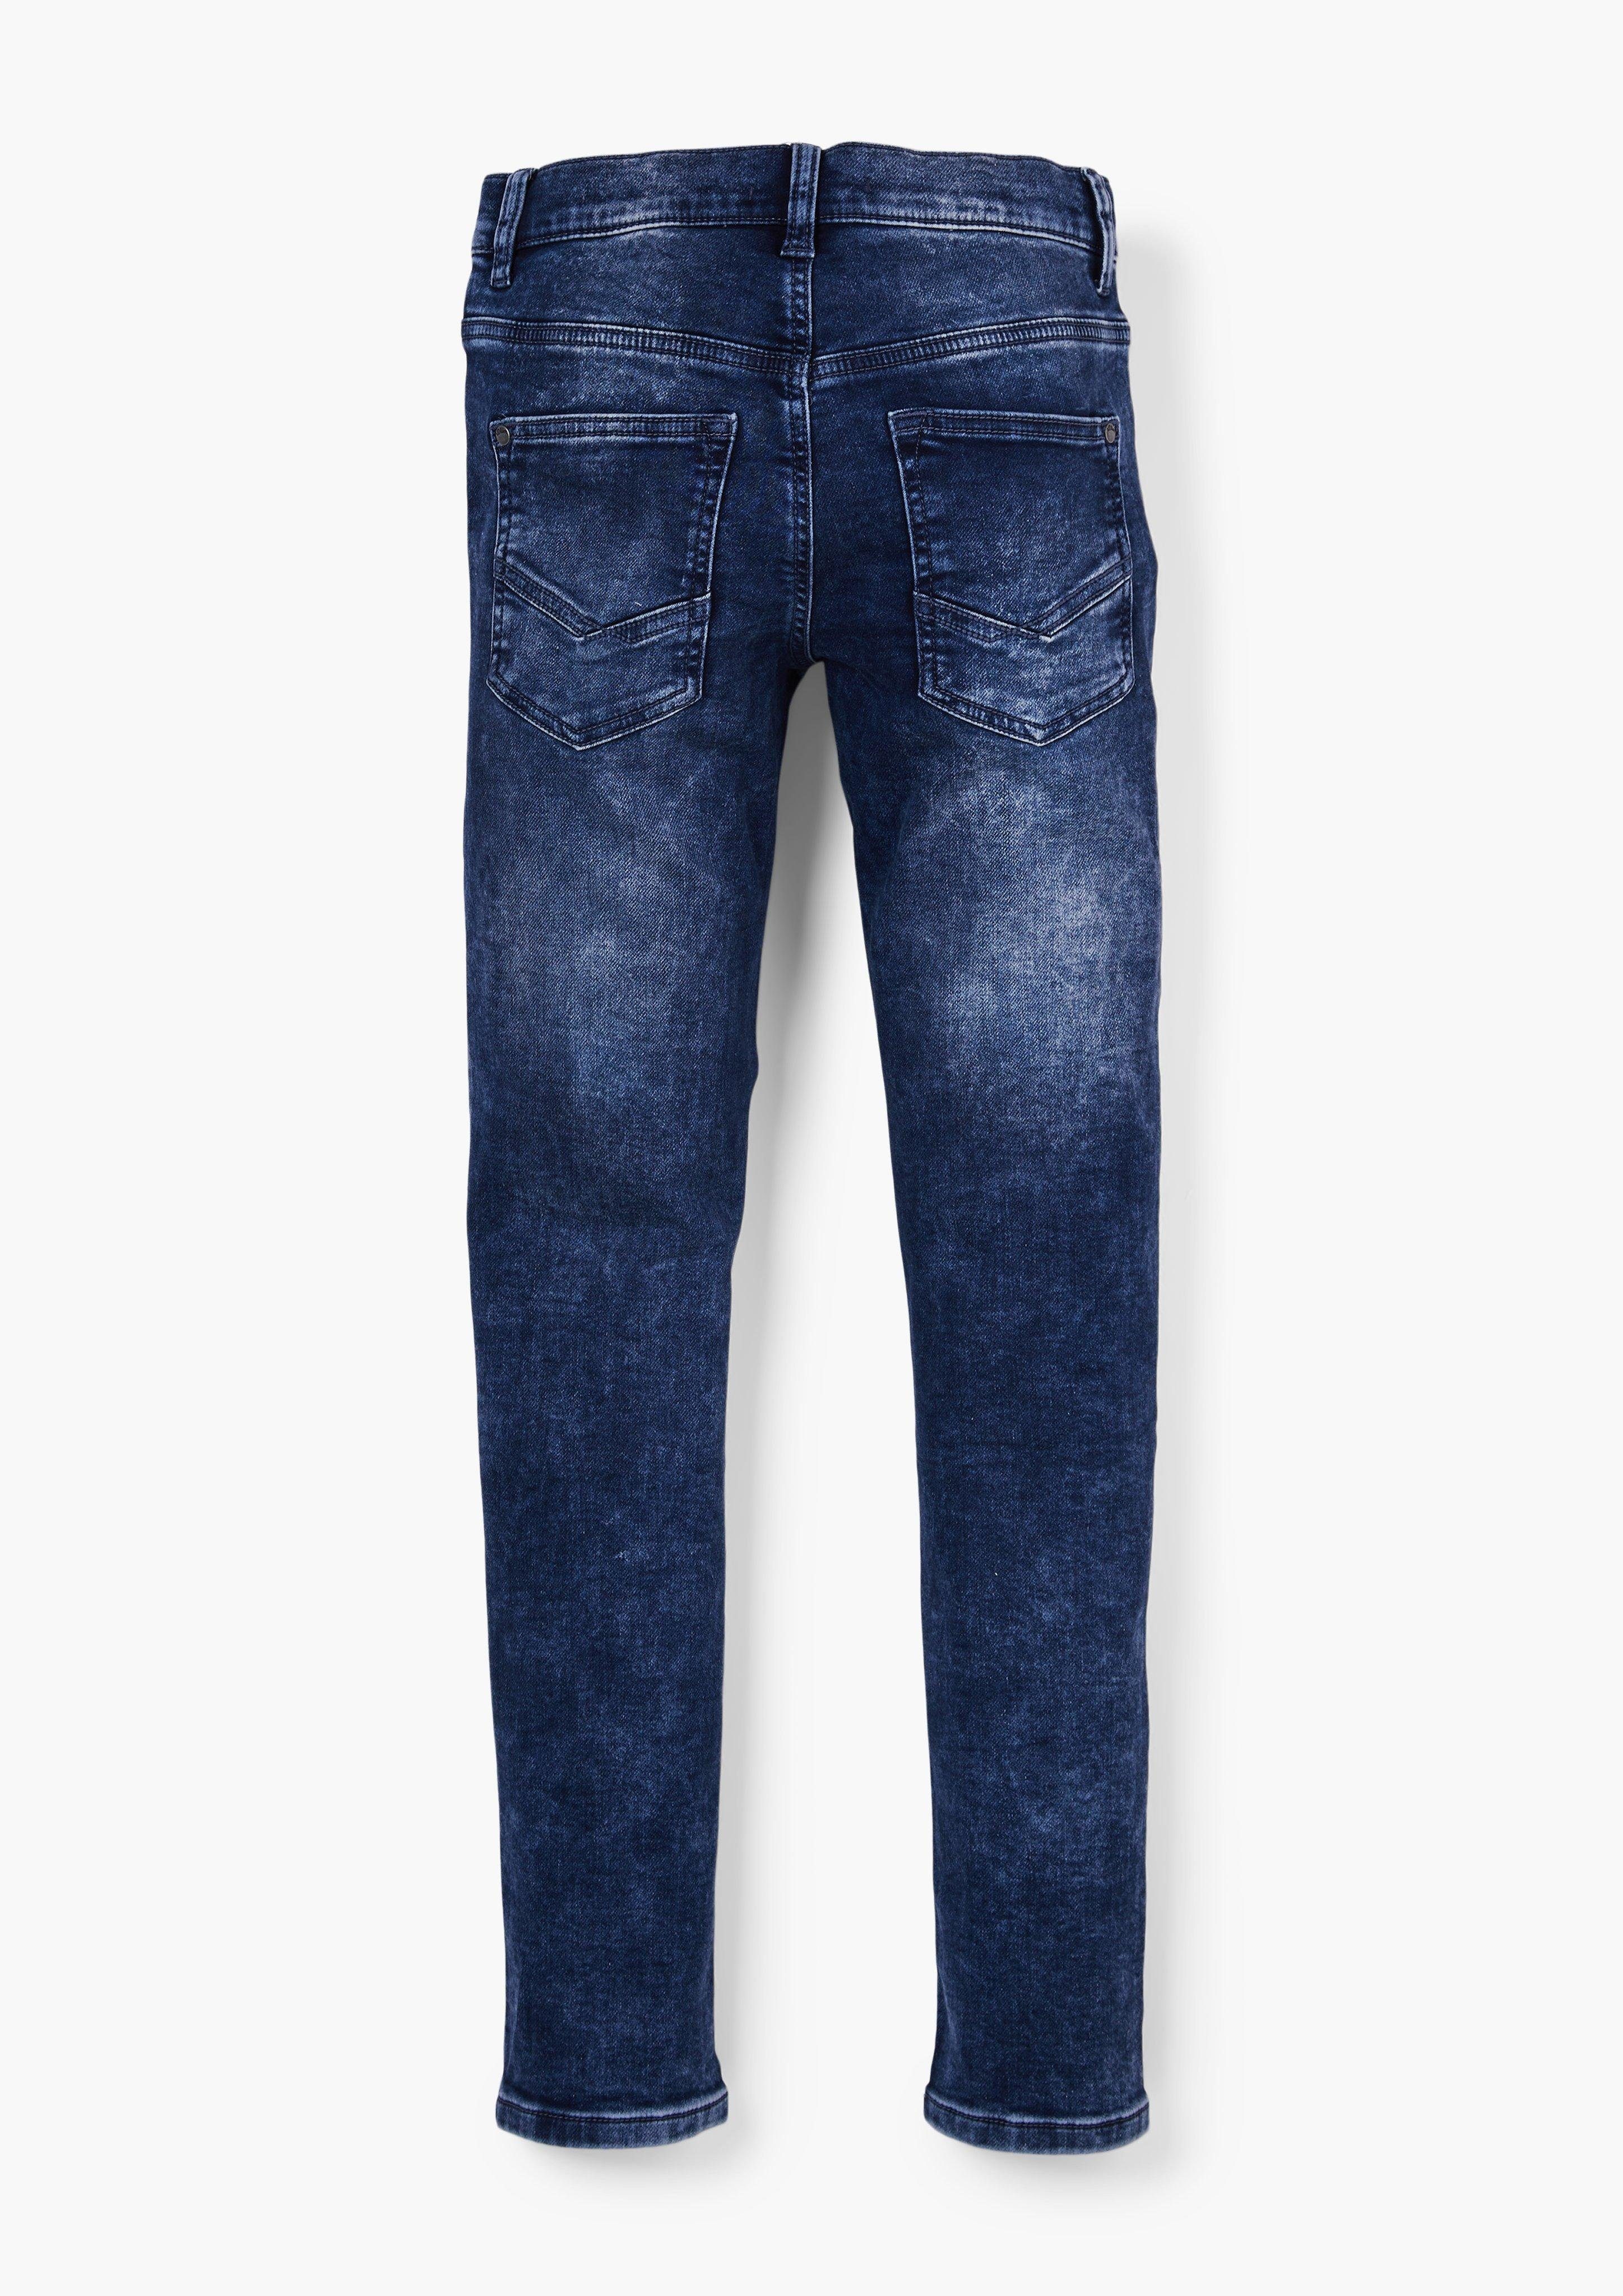 / Jeans Rise s.Oliver s.Oliver 5-Pocket-Jeans Mid / Junior Leg Skinny Fit Skinny / Seattle Slim Waschung